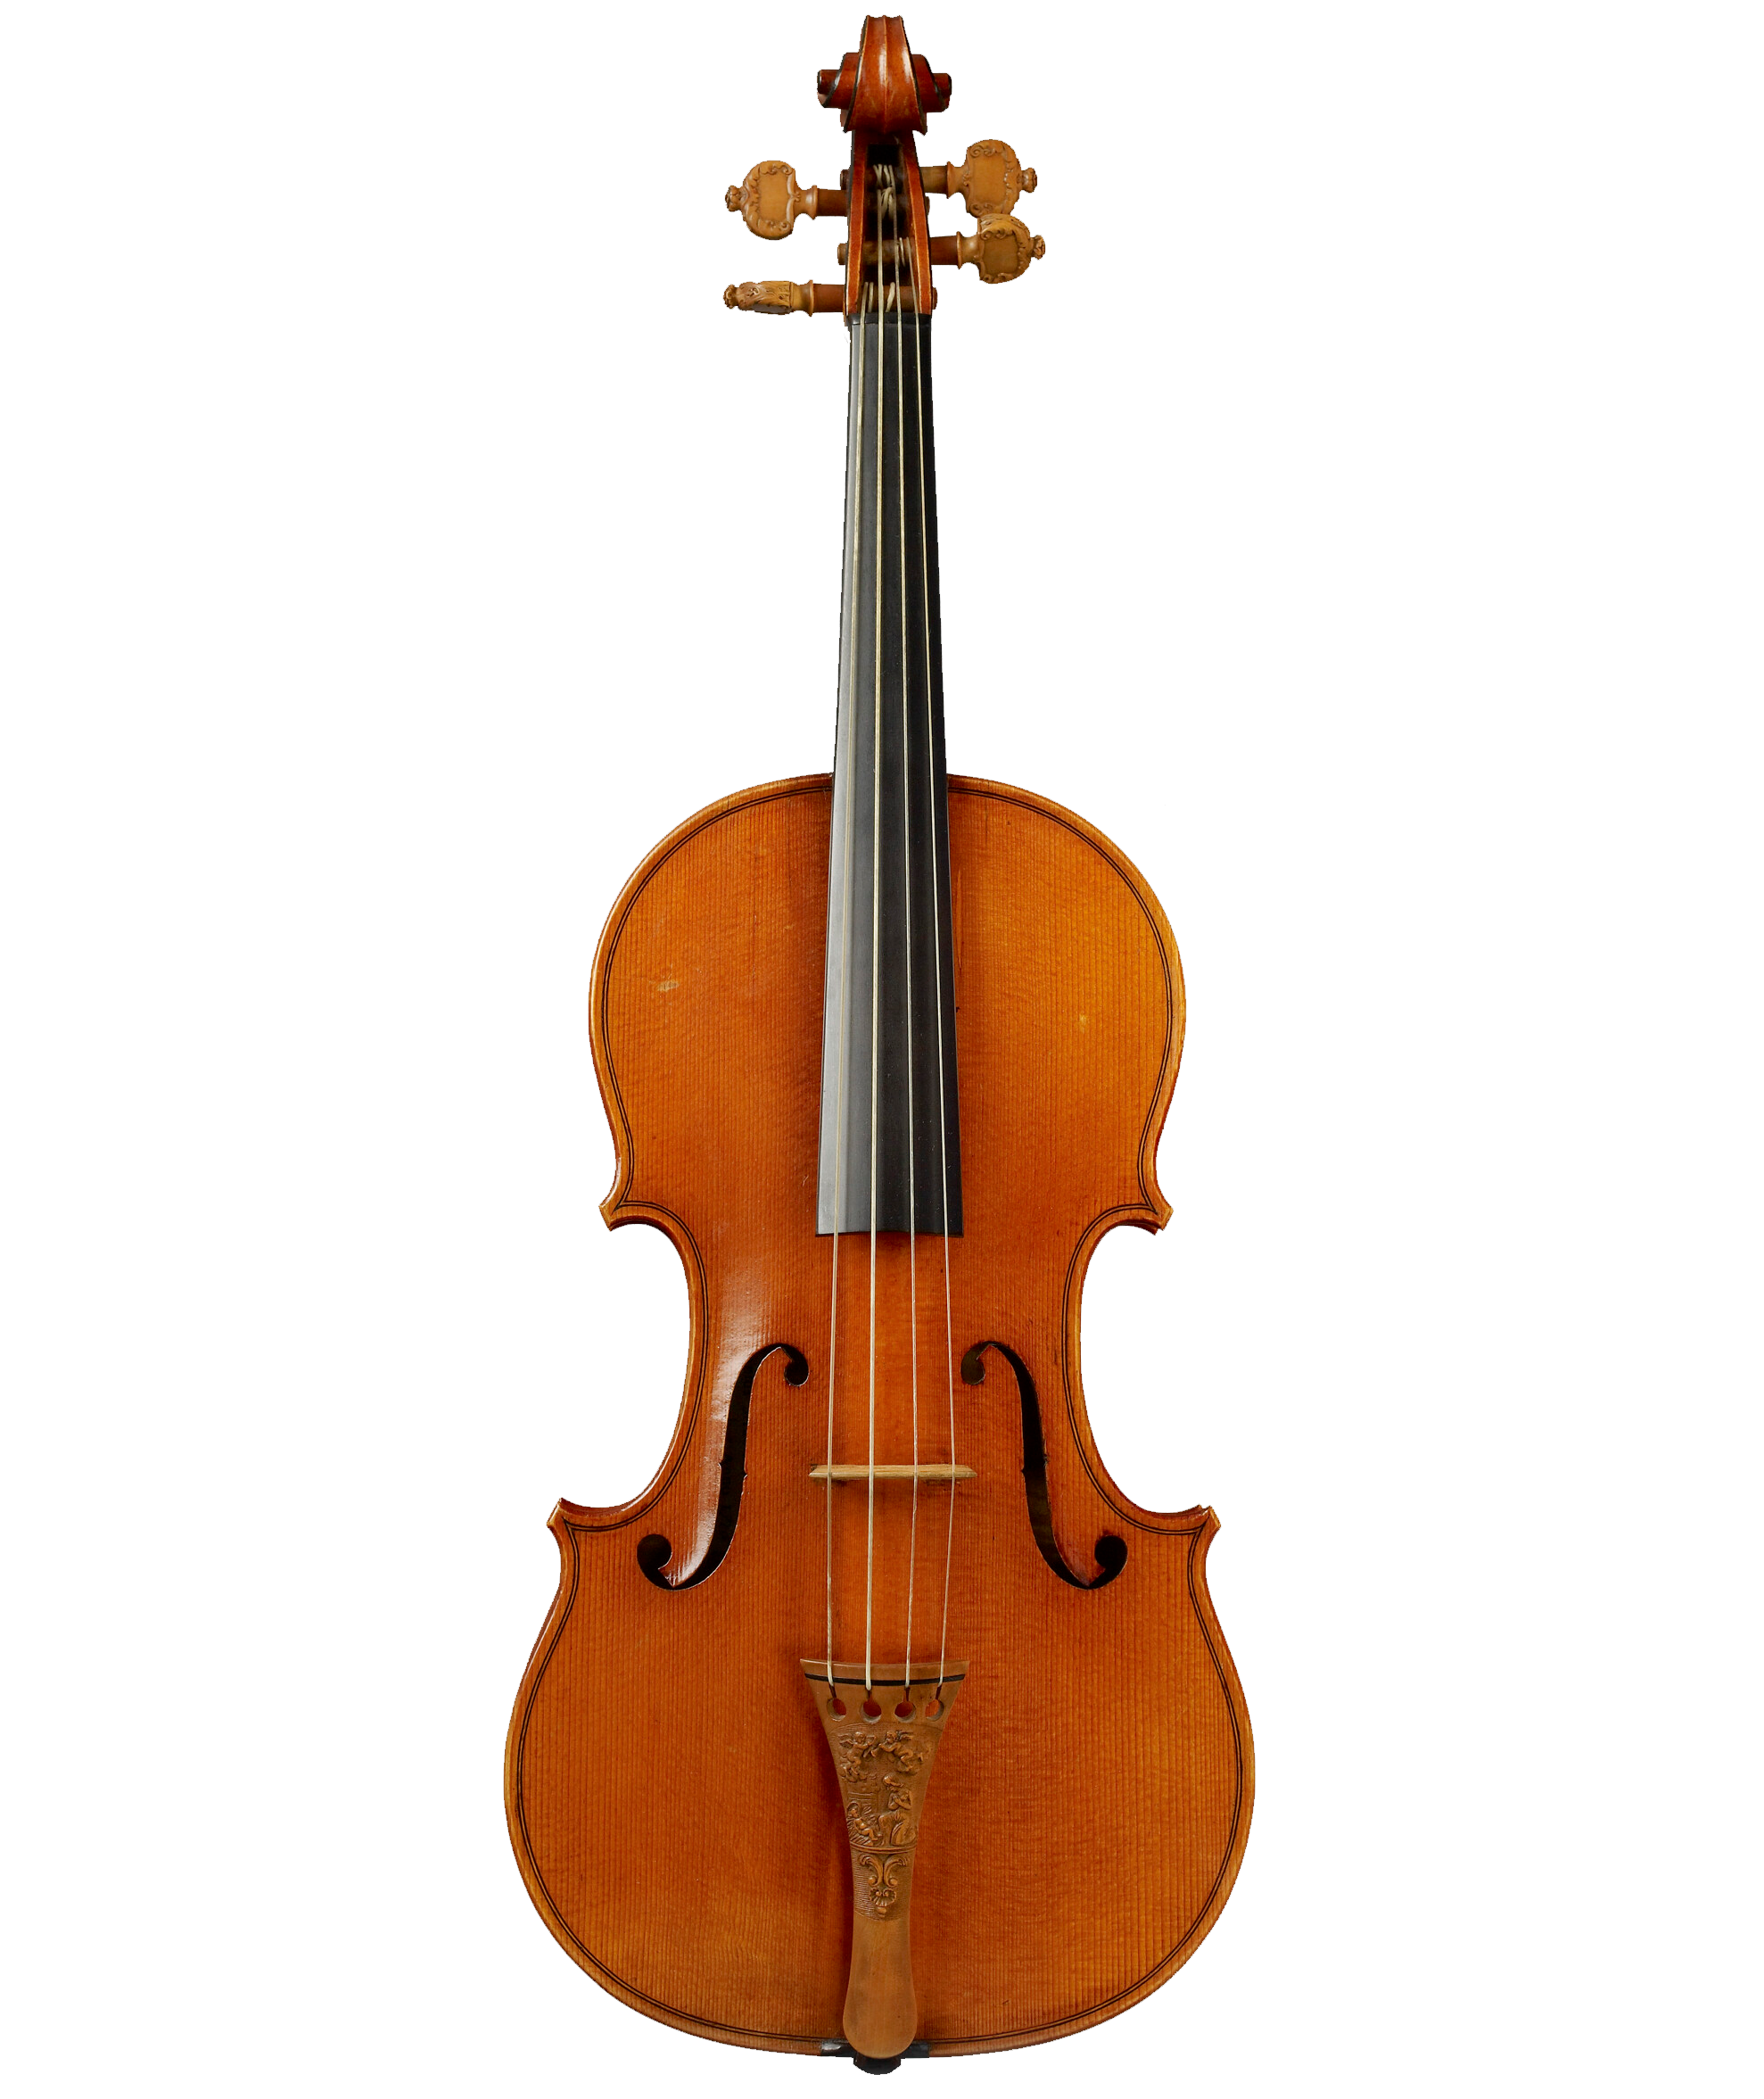 The Messiah Stradivari